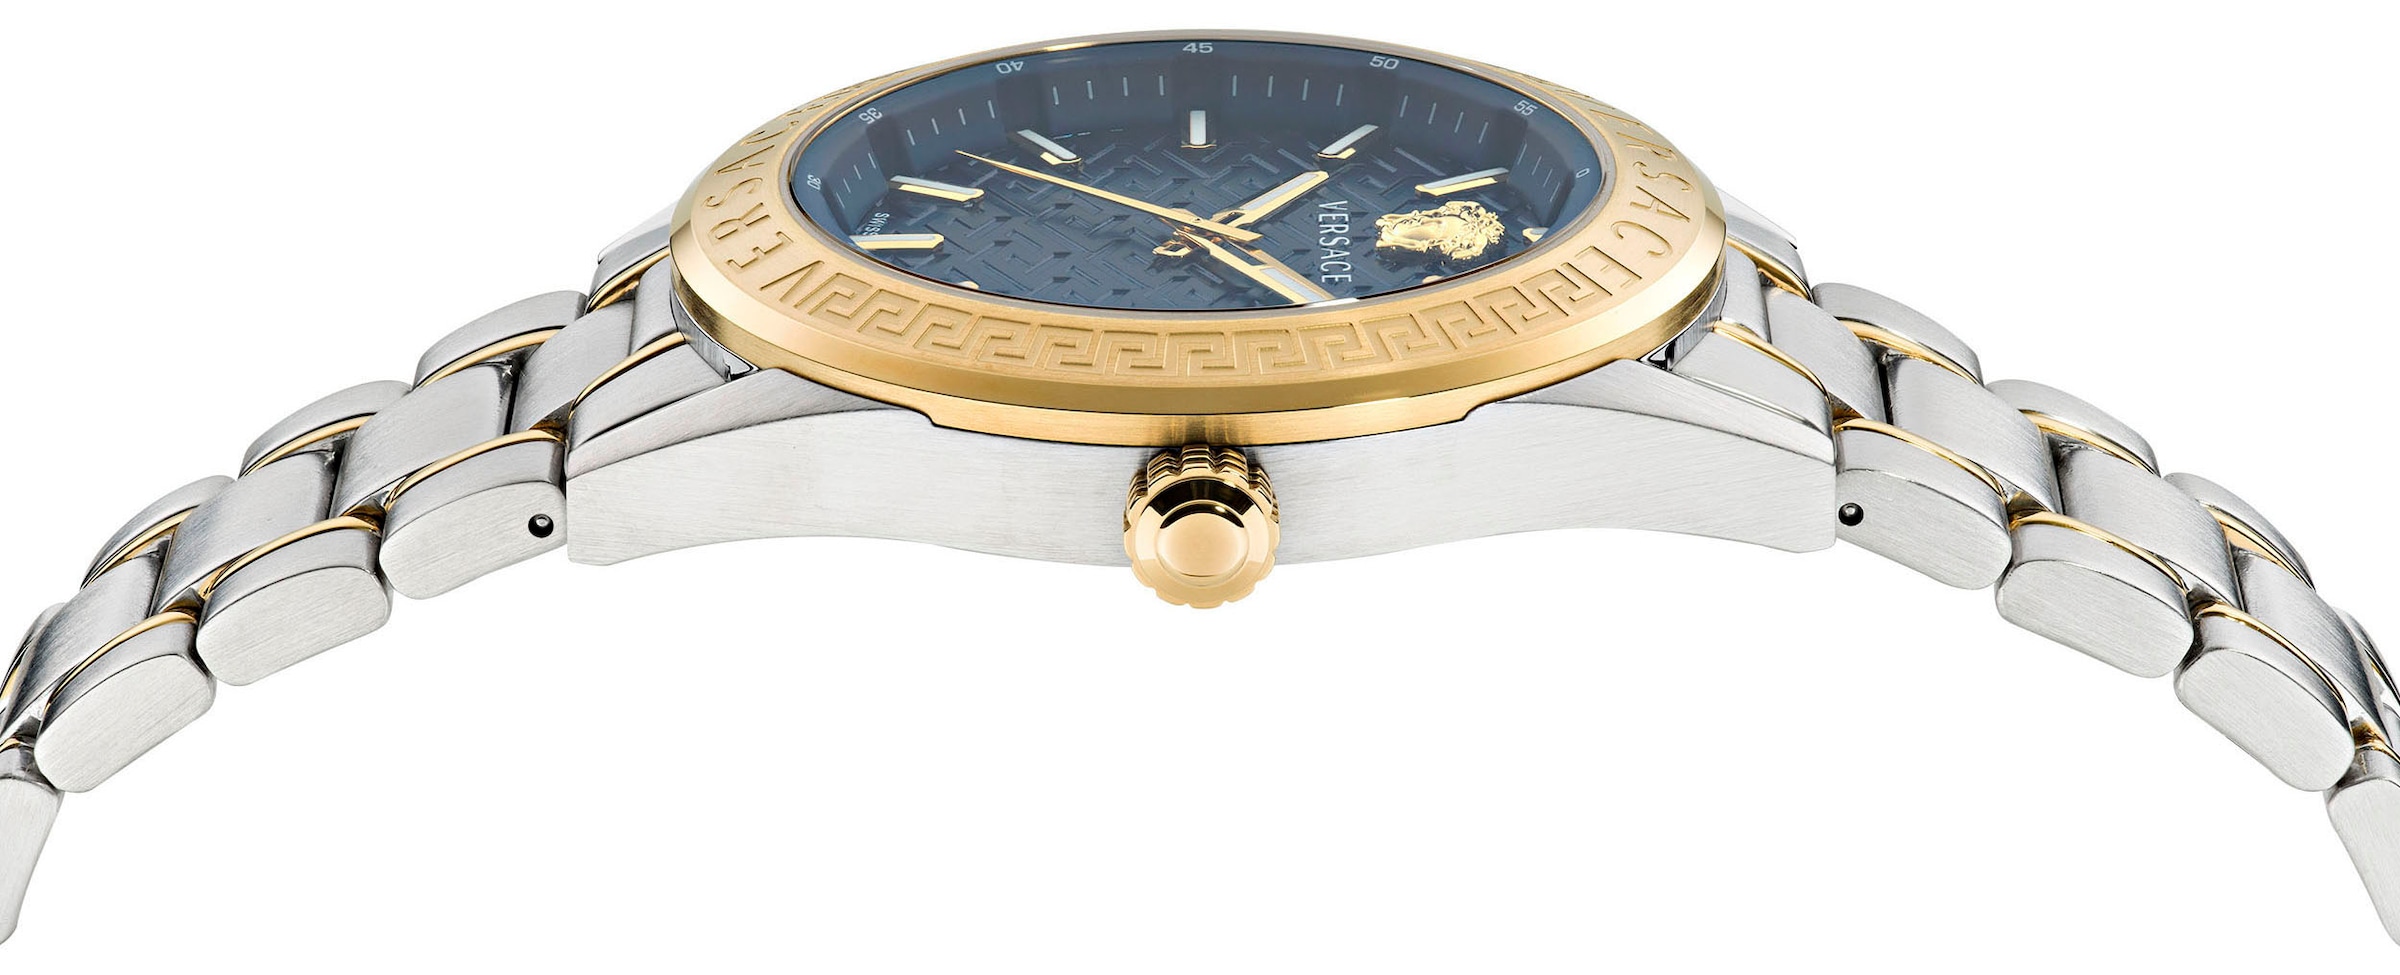 Versace Quarzuhr »V-CODE, VE6A00523«, Armbanduhr, Herrenuhr, Datum, Swiss Made